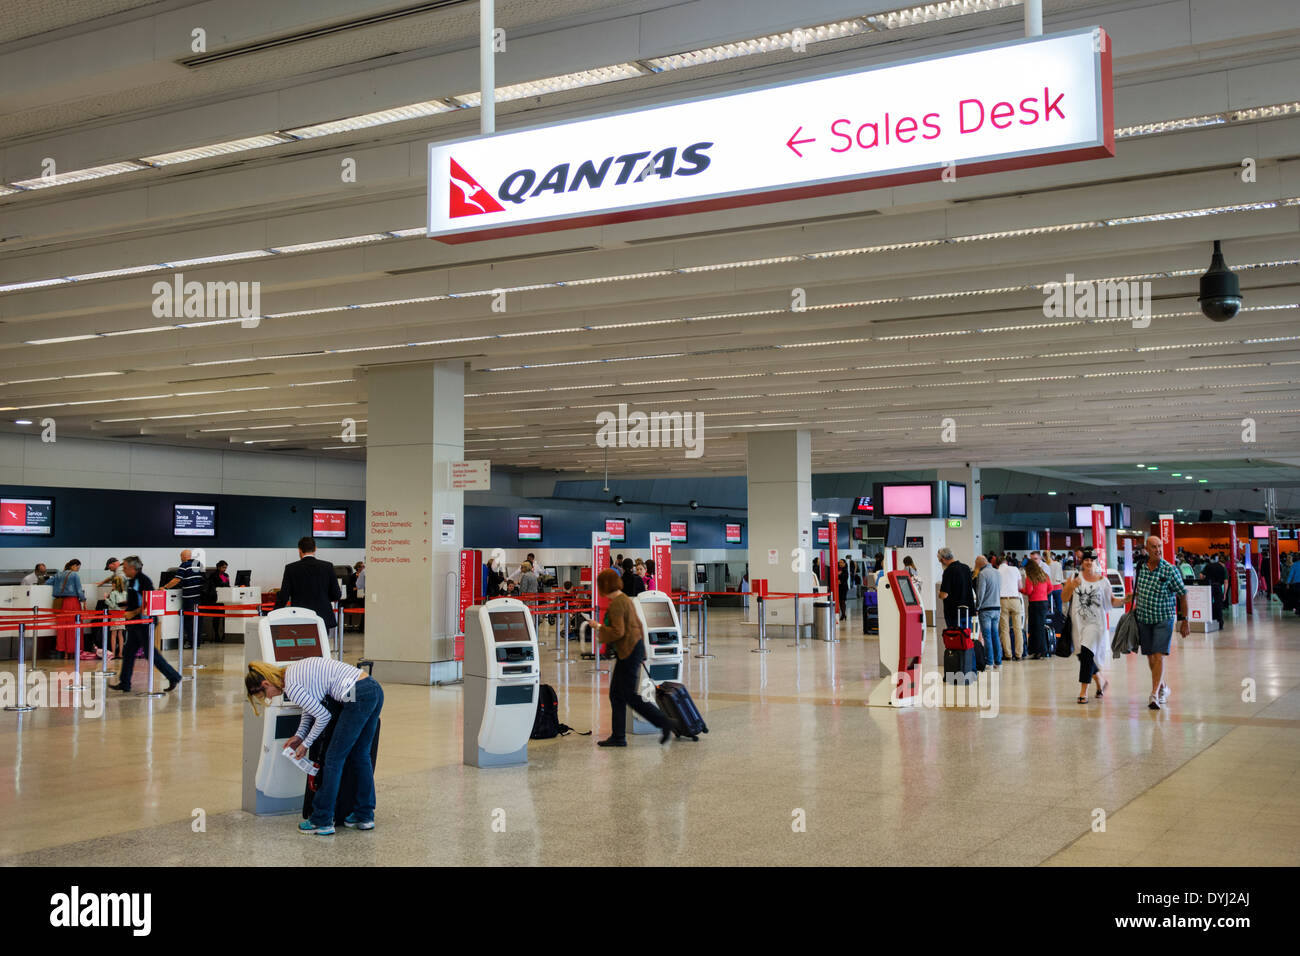 Melbourne Australia,Tullamarine Airport,MEL,terminal,Qantas,airline,sales desk,sign,self-service,kiosk,kiosks,AU140307016 Stock Photo